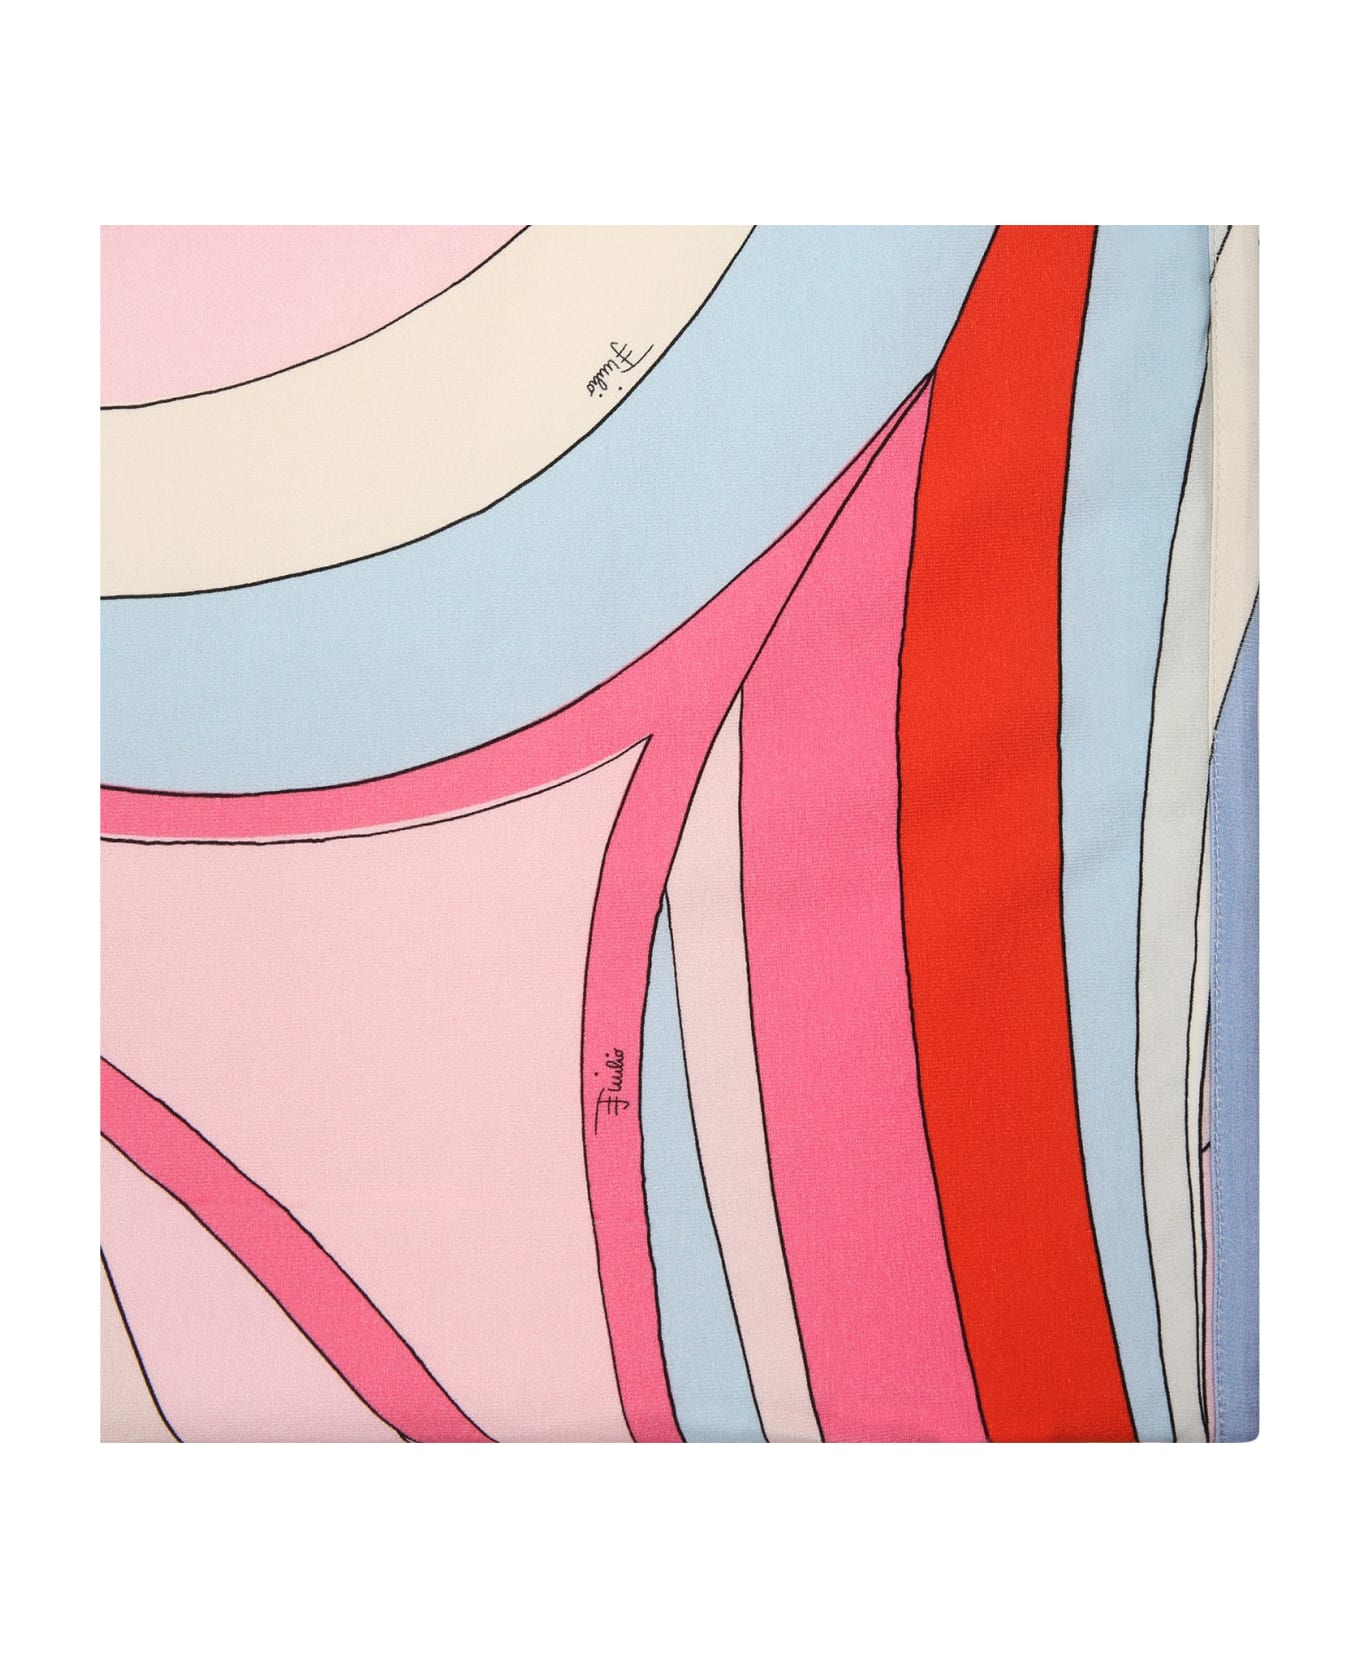 Pucci Multicolor Blanket For Baby Girl - Multicolor